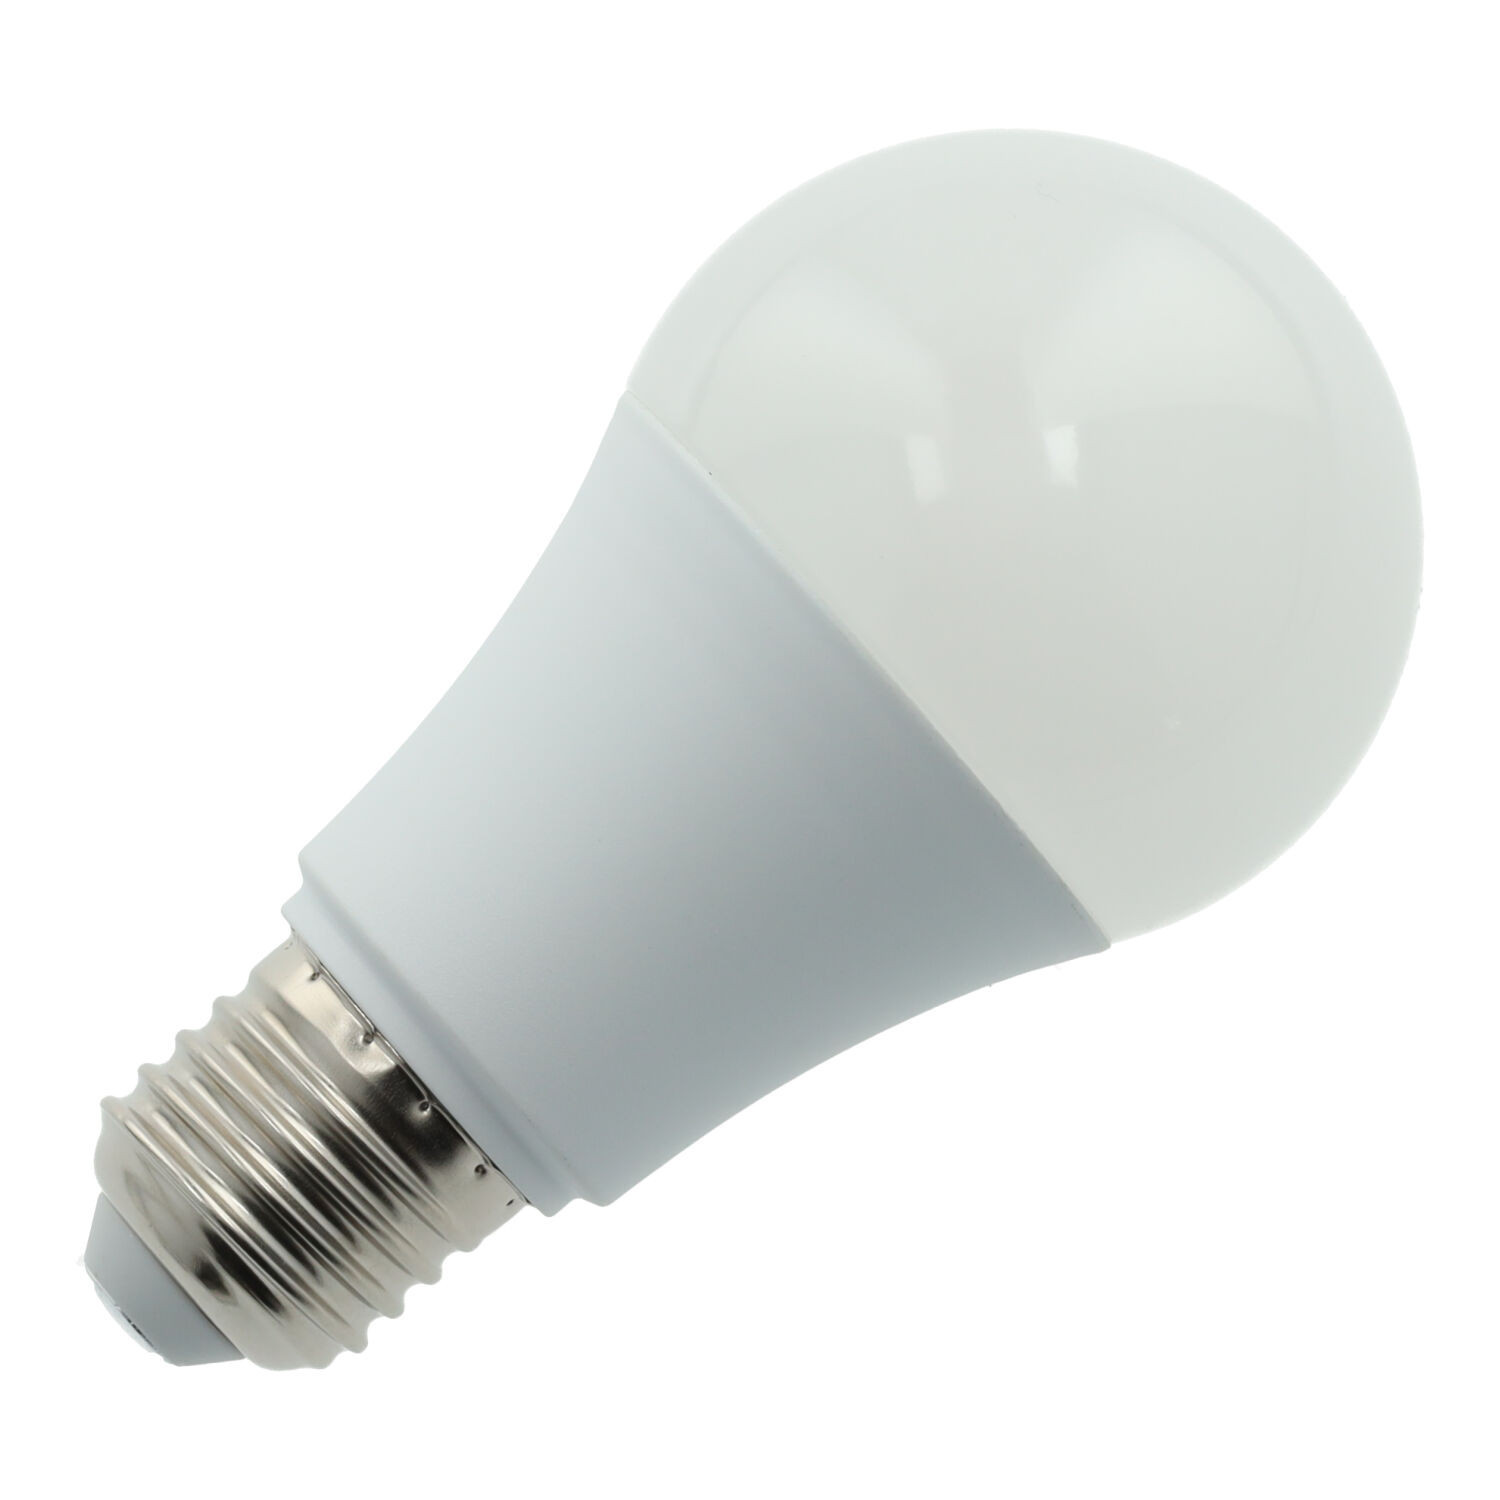 Light Bulb - E27, 10W Dimmable